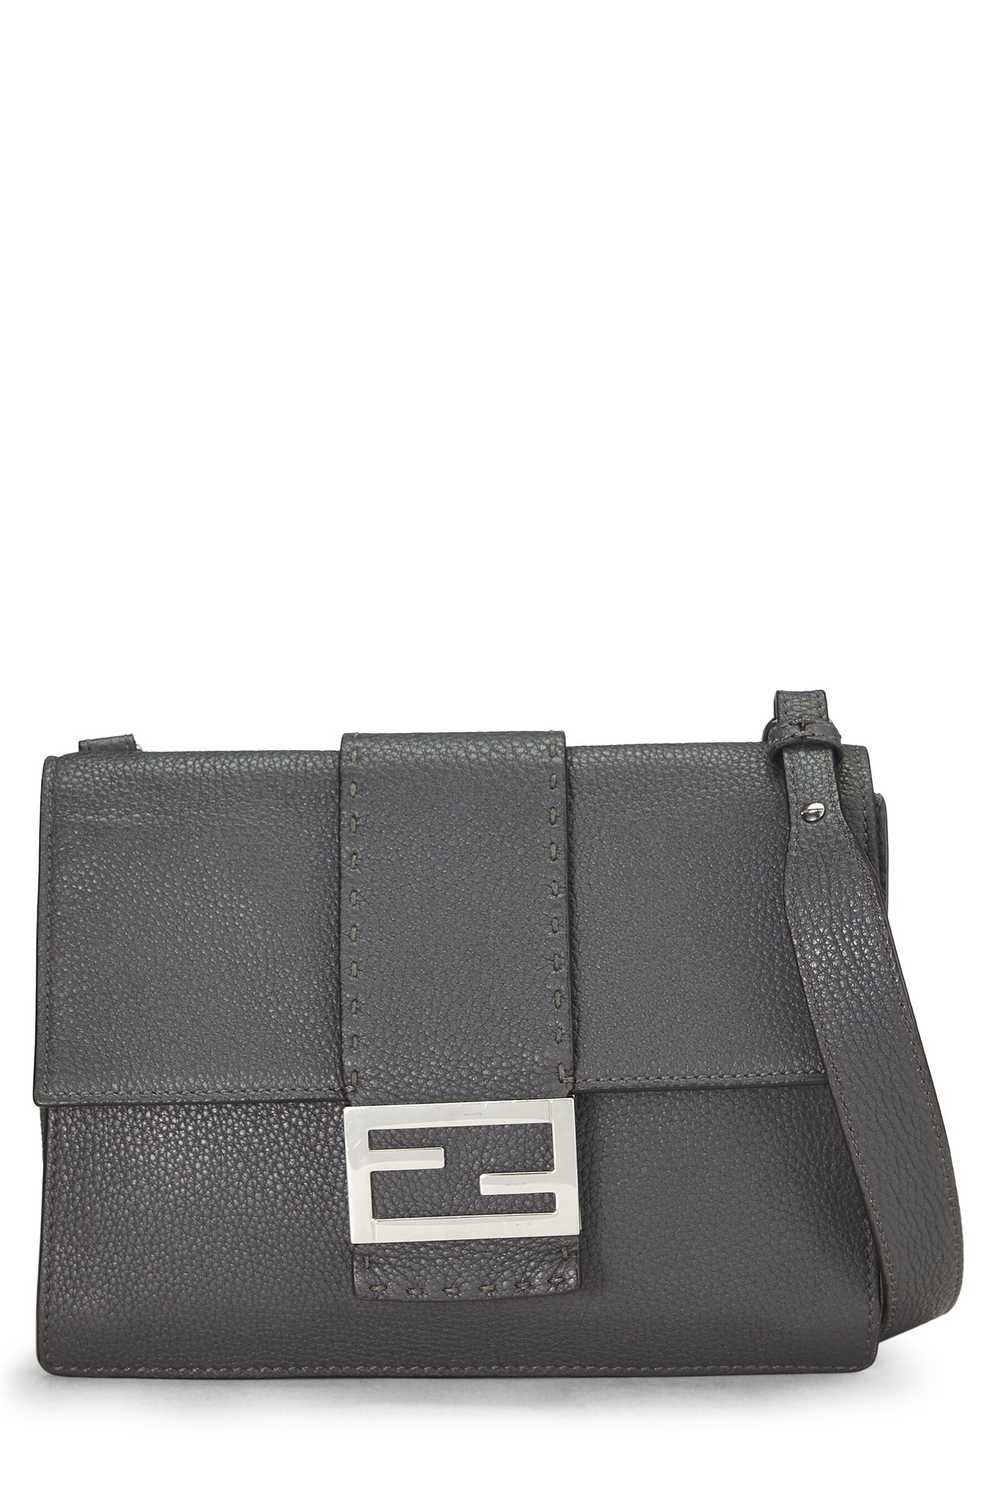 Grey Leather Flat Baguette Bag Medium - image 1